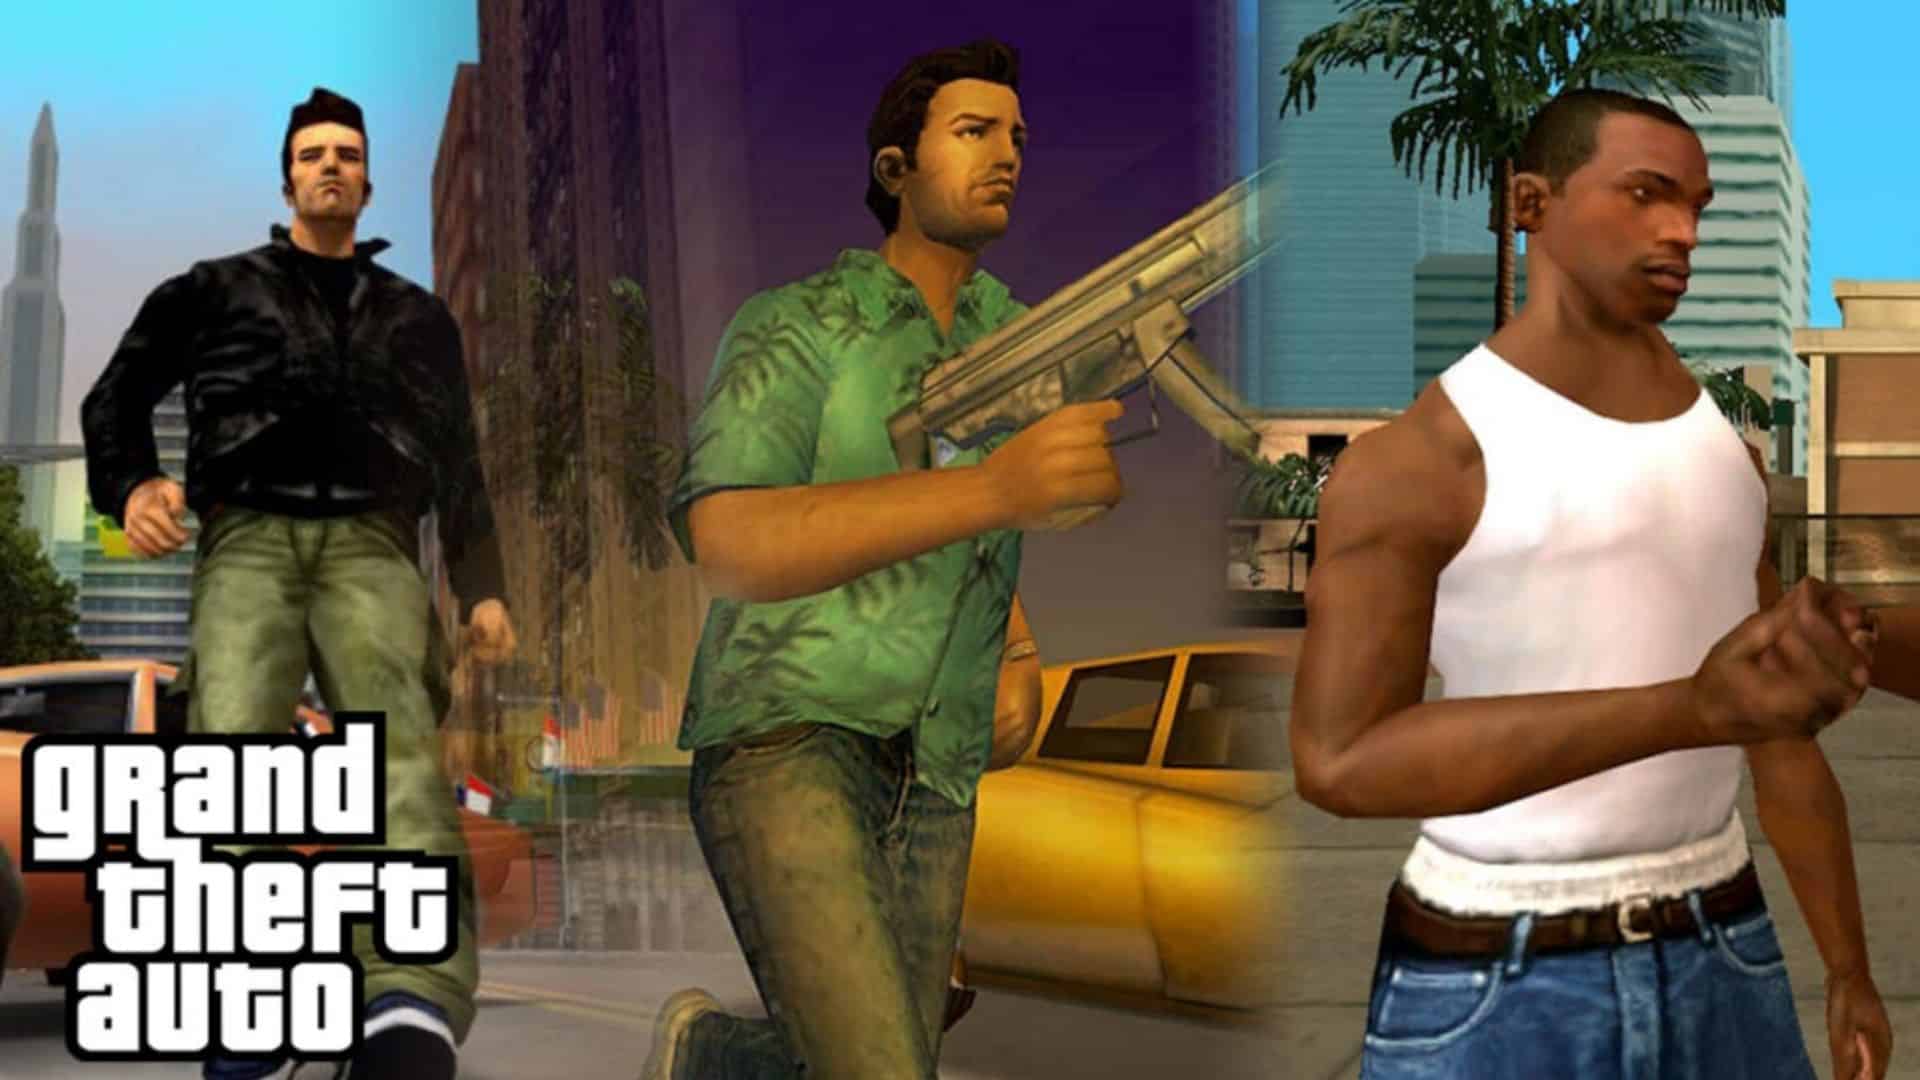 GTA trilogy characters running around